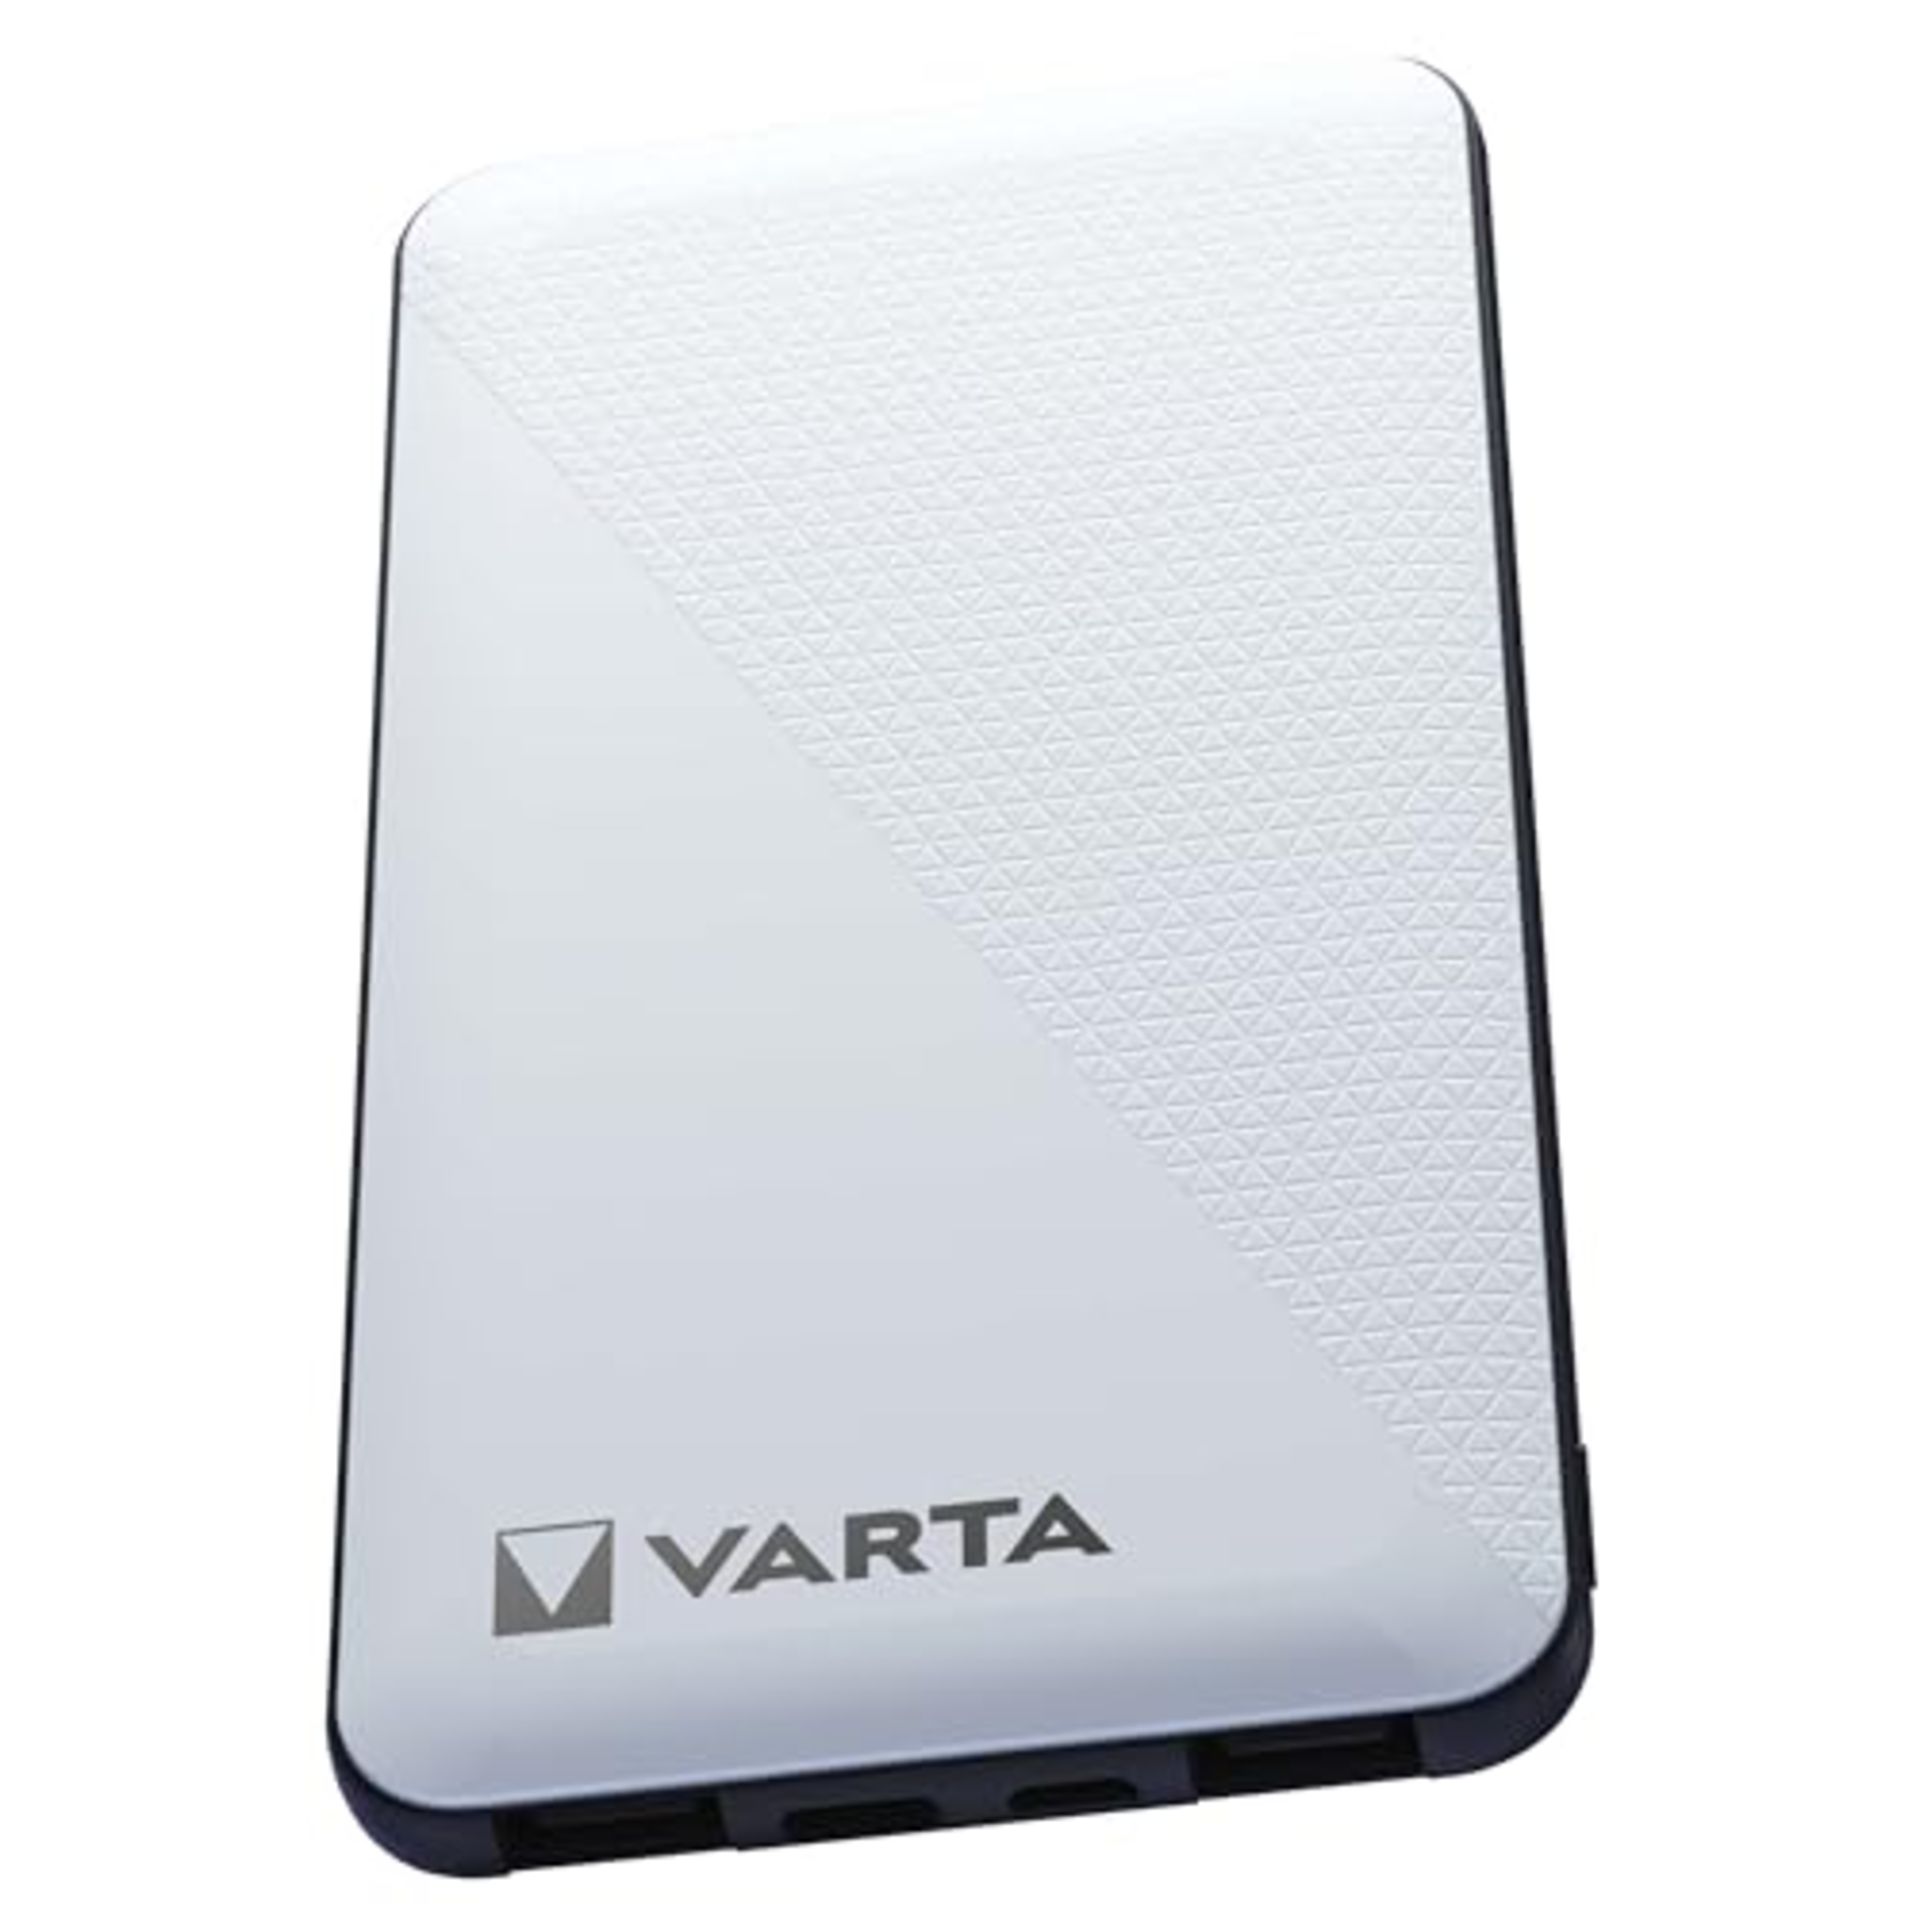 VARTA Power Bank 5000mAh, Powerbank Energy with 4 ports (1x Micro USB, 2x USB A, 1x US - Image 4 of 6